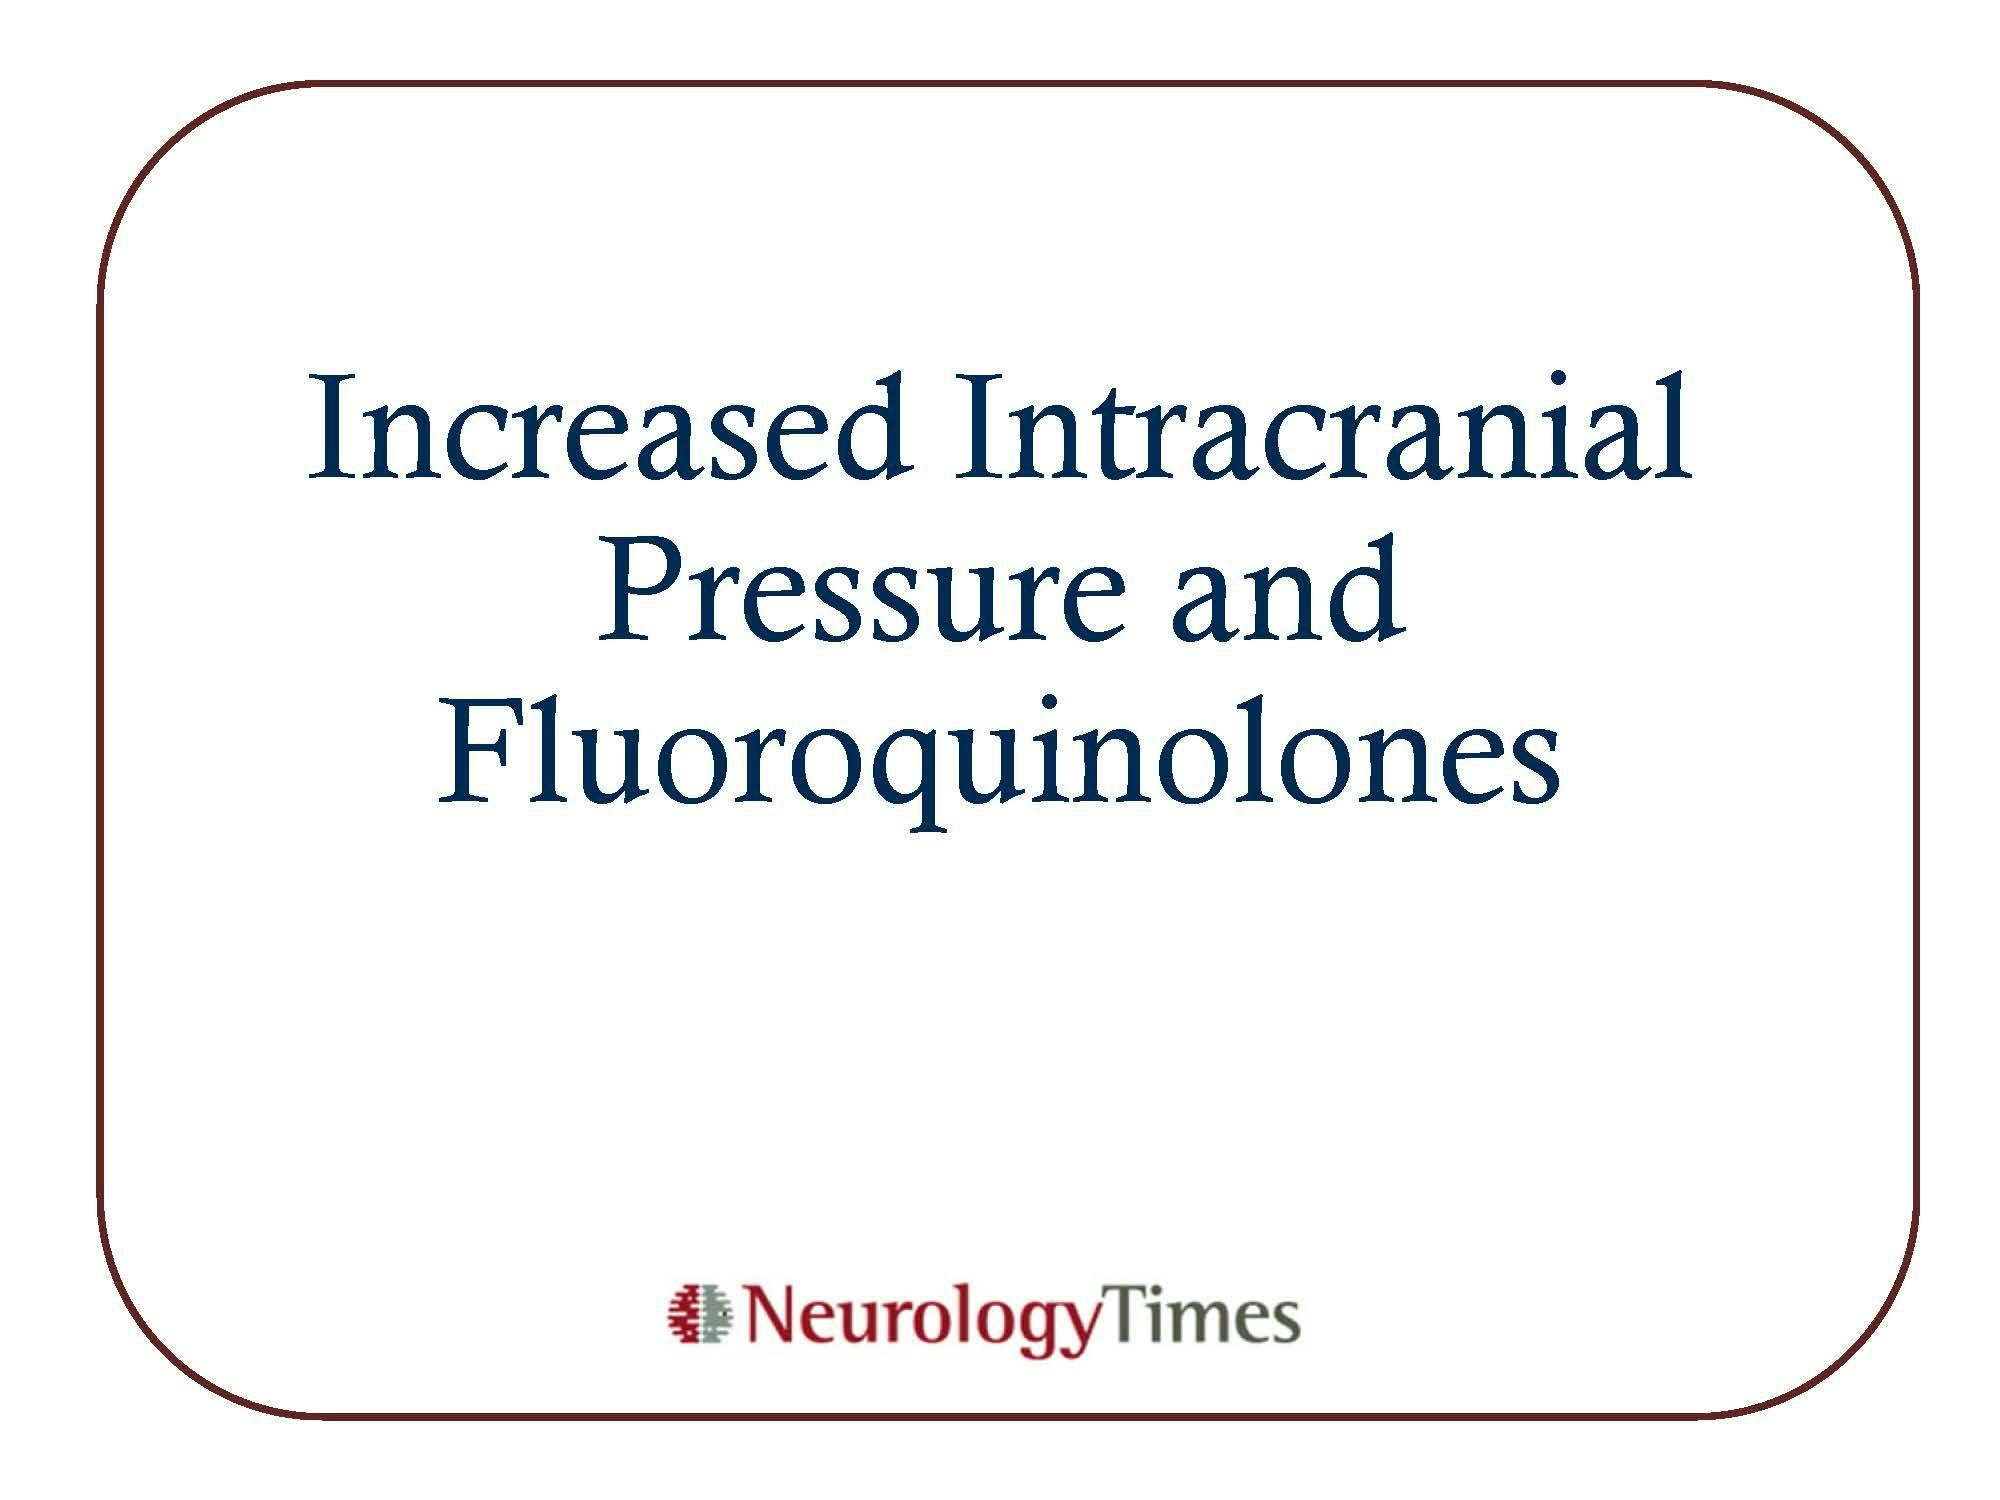 Increased Intracranial Pressure and Fluoroquinolones